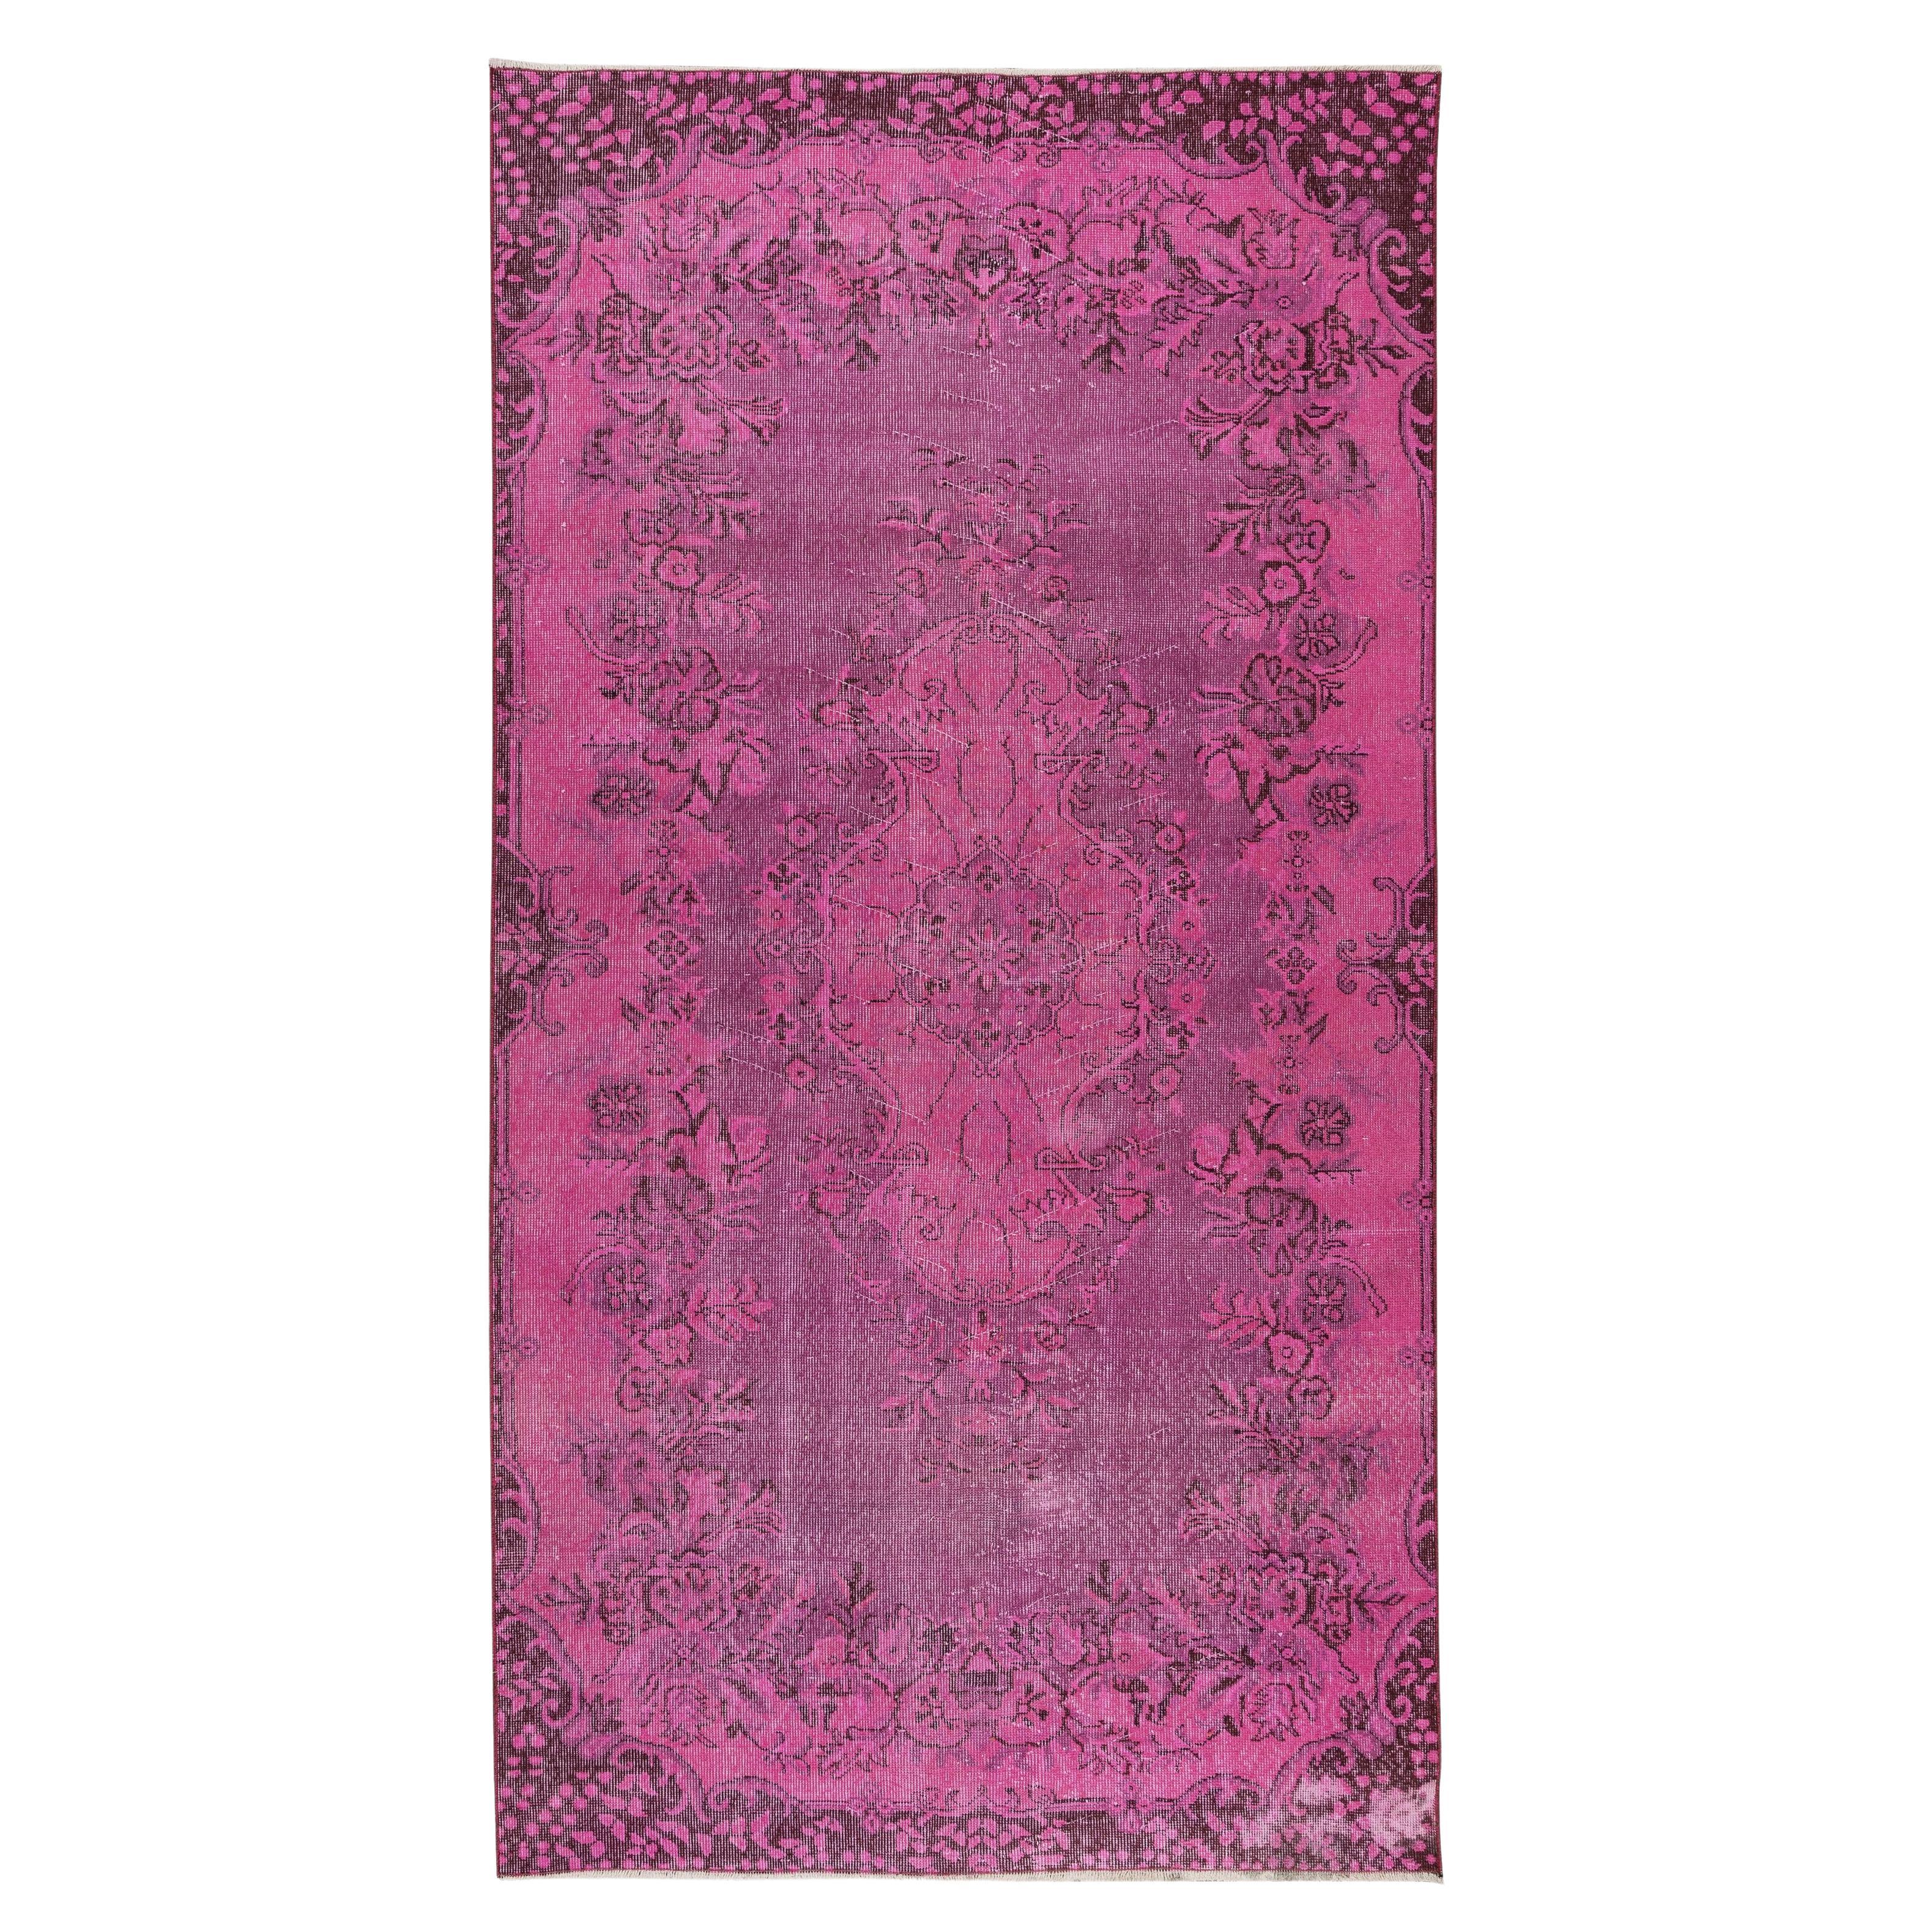 5x9.4 Ft Vintage Handmade Turkish Area Rug in Pink with Medallion Design